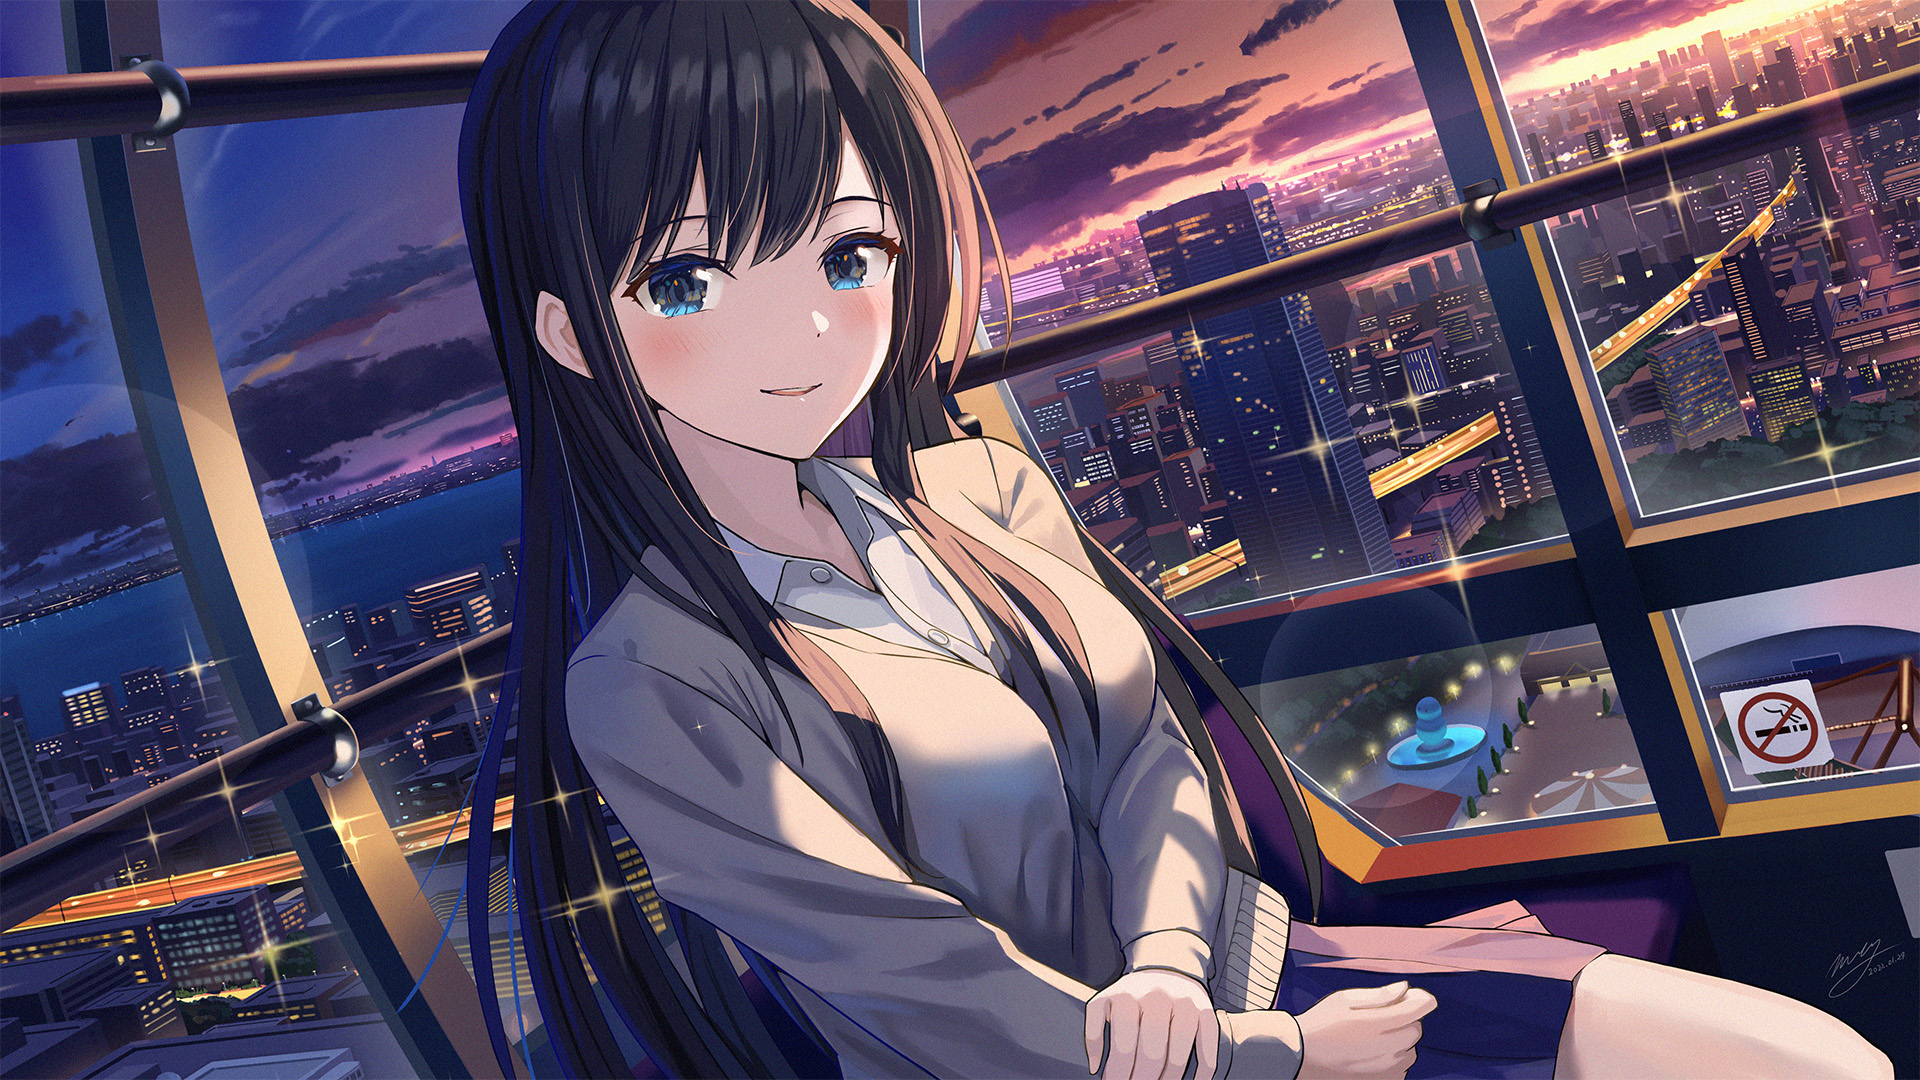 Anime 1920x1080 anime anime girls M.A.Y. artwork black hair long hair blue eyes blushing cityscape sunset